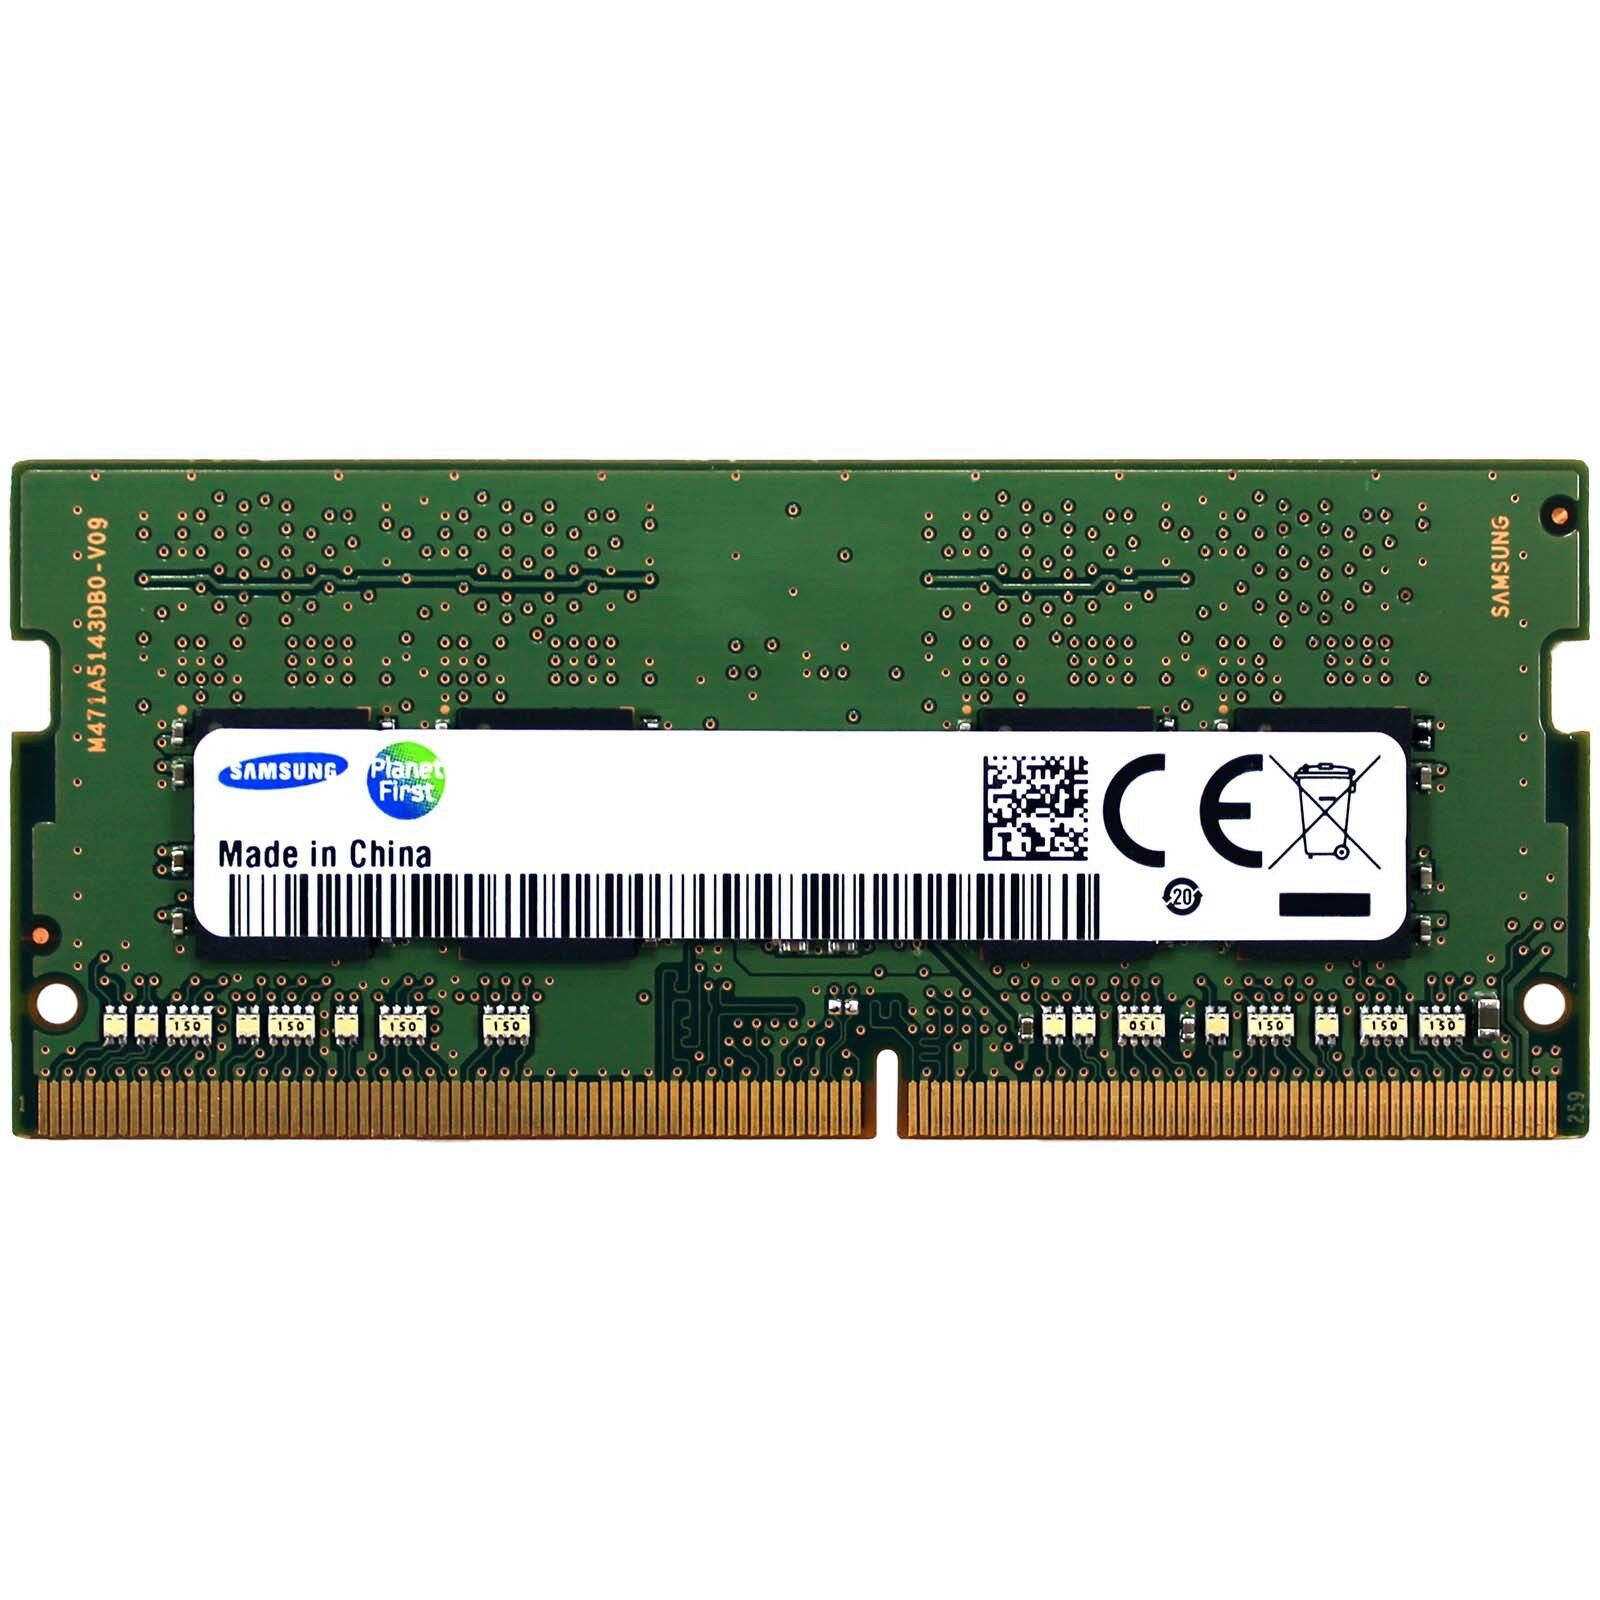 4GB Module DDR4 2133MHz Samsung M471A5143DB0-C PB 17000 NON-ECC Laptop Memory RAM